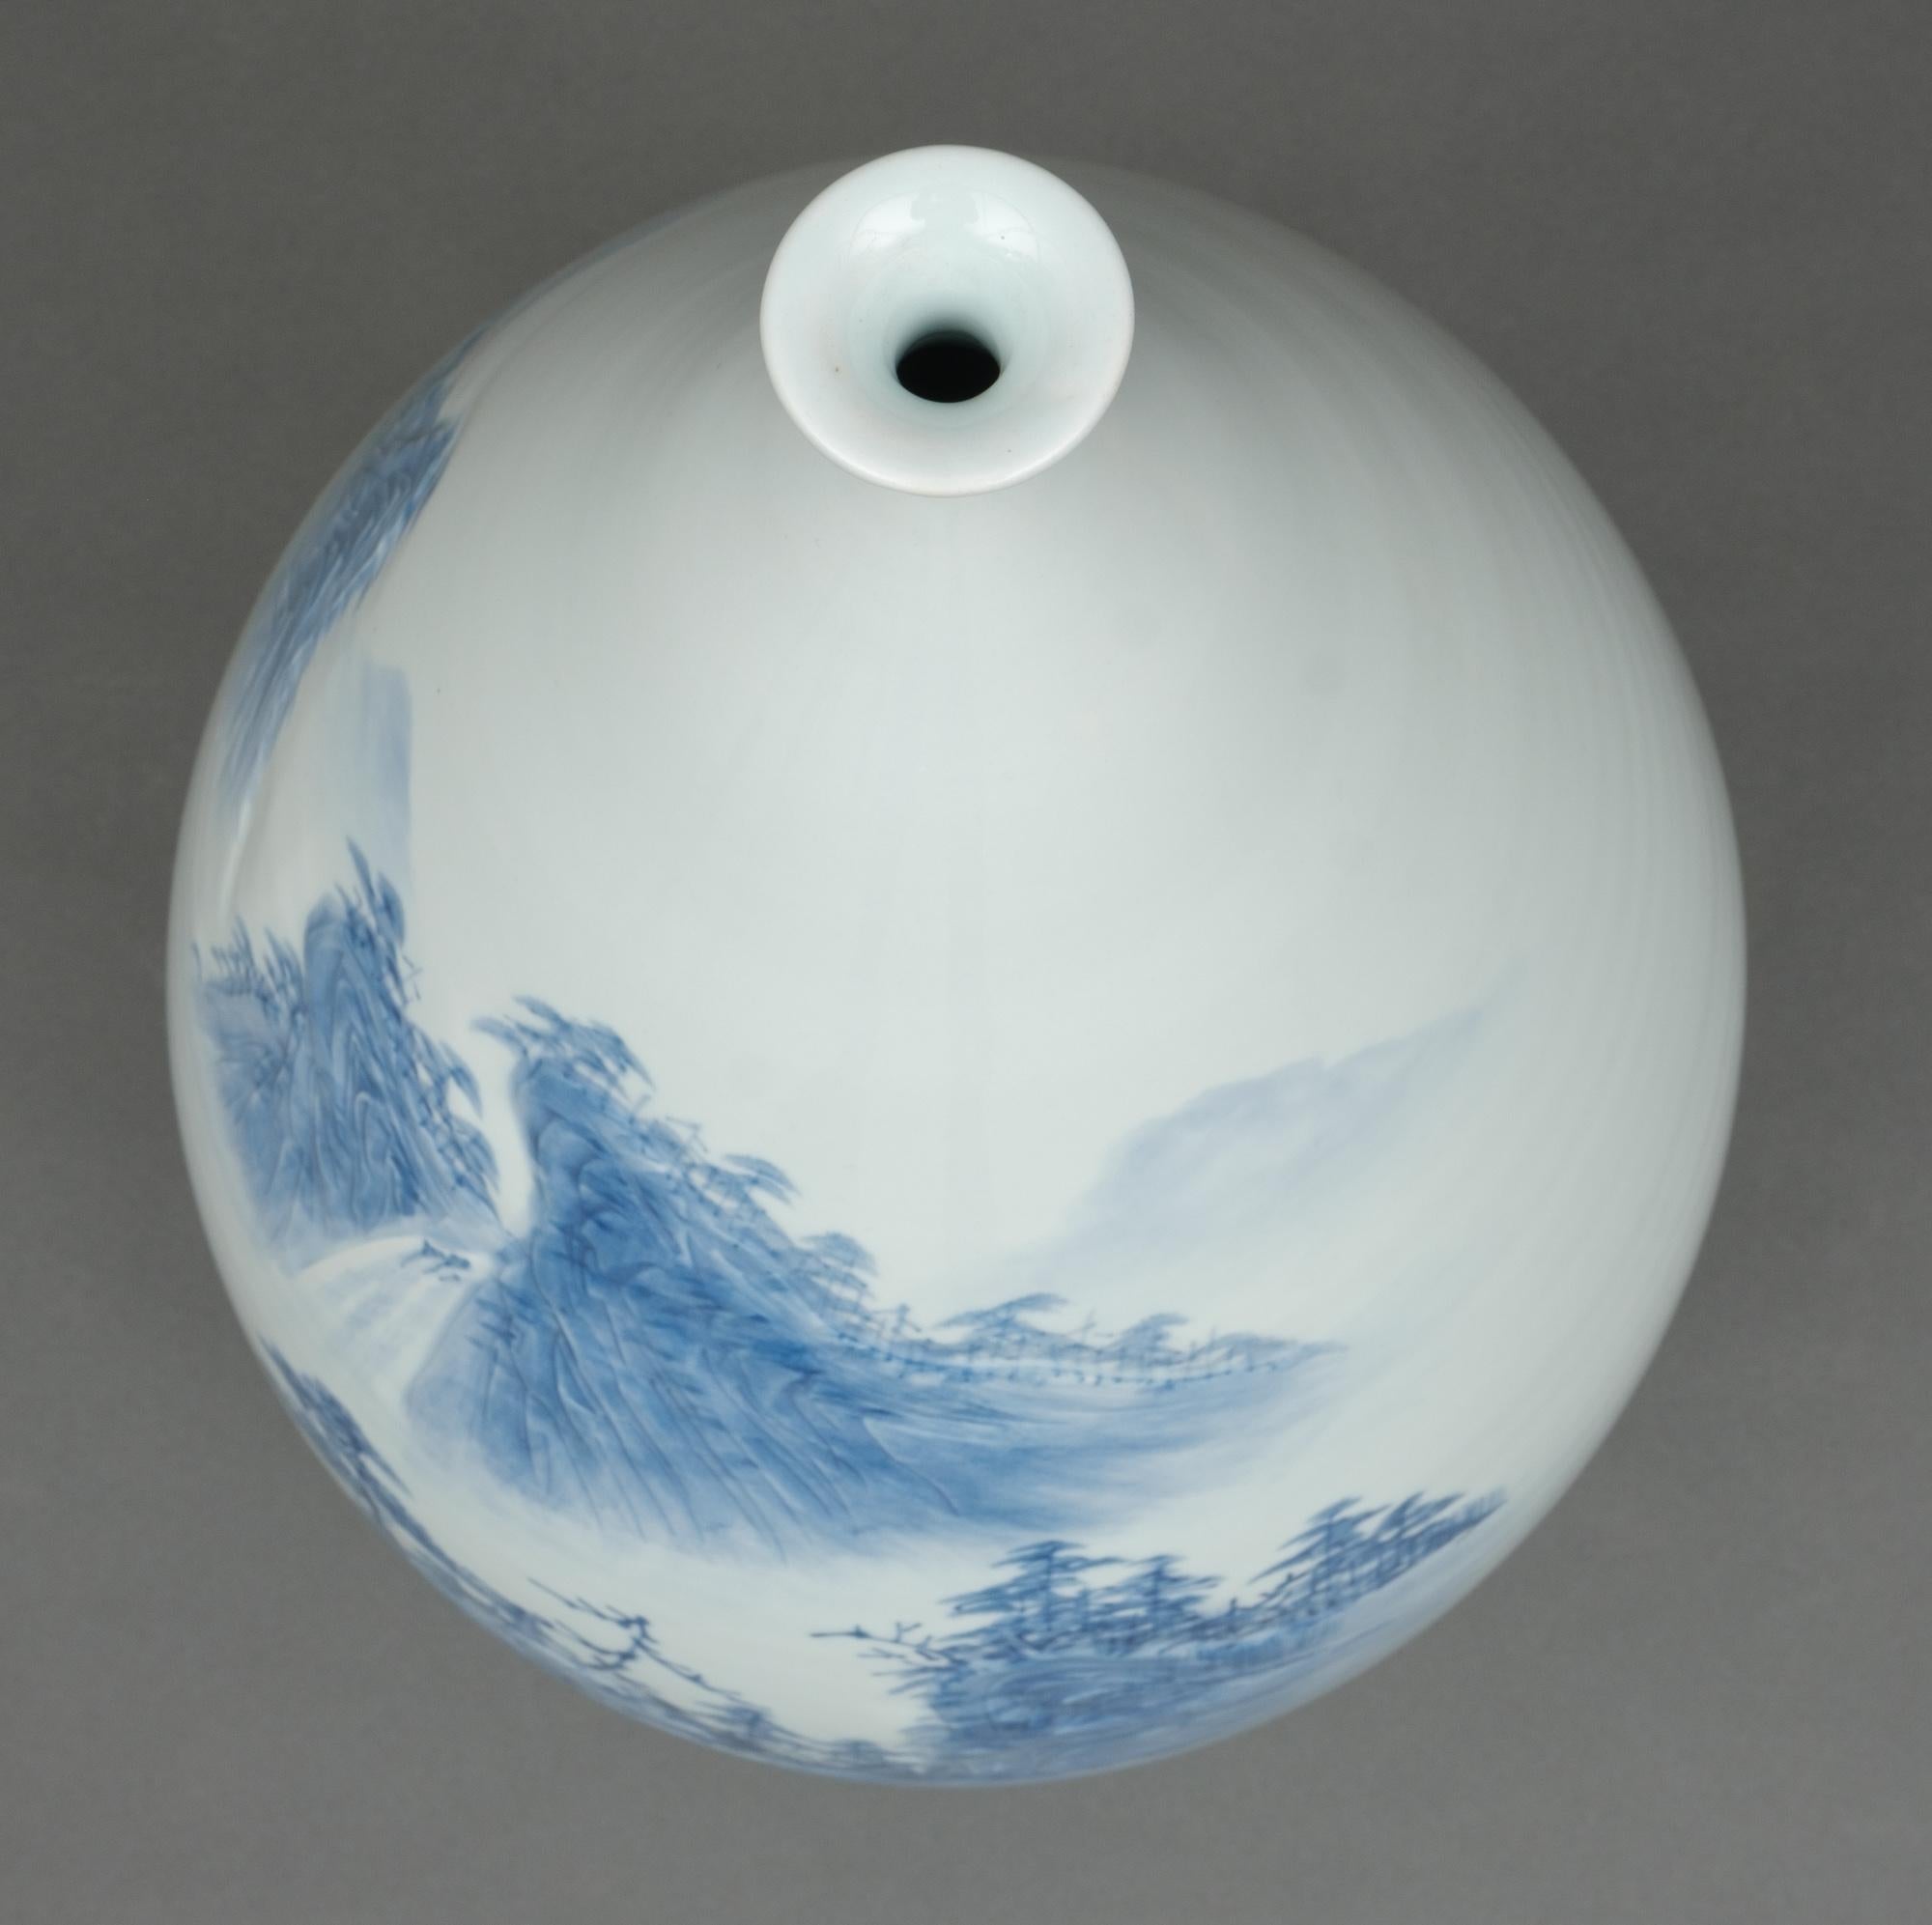 Large Japanese Ovoid Porcelain Vase with Blue & White Landscape, by Shigan 芝岩 2